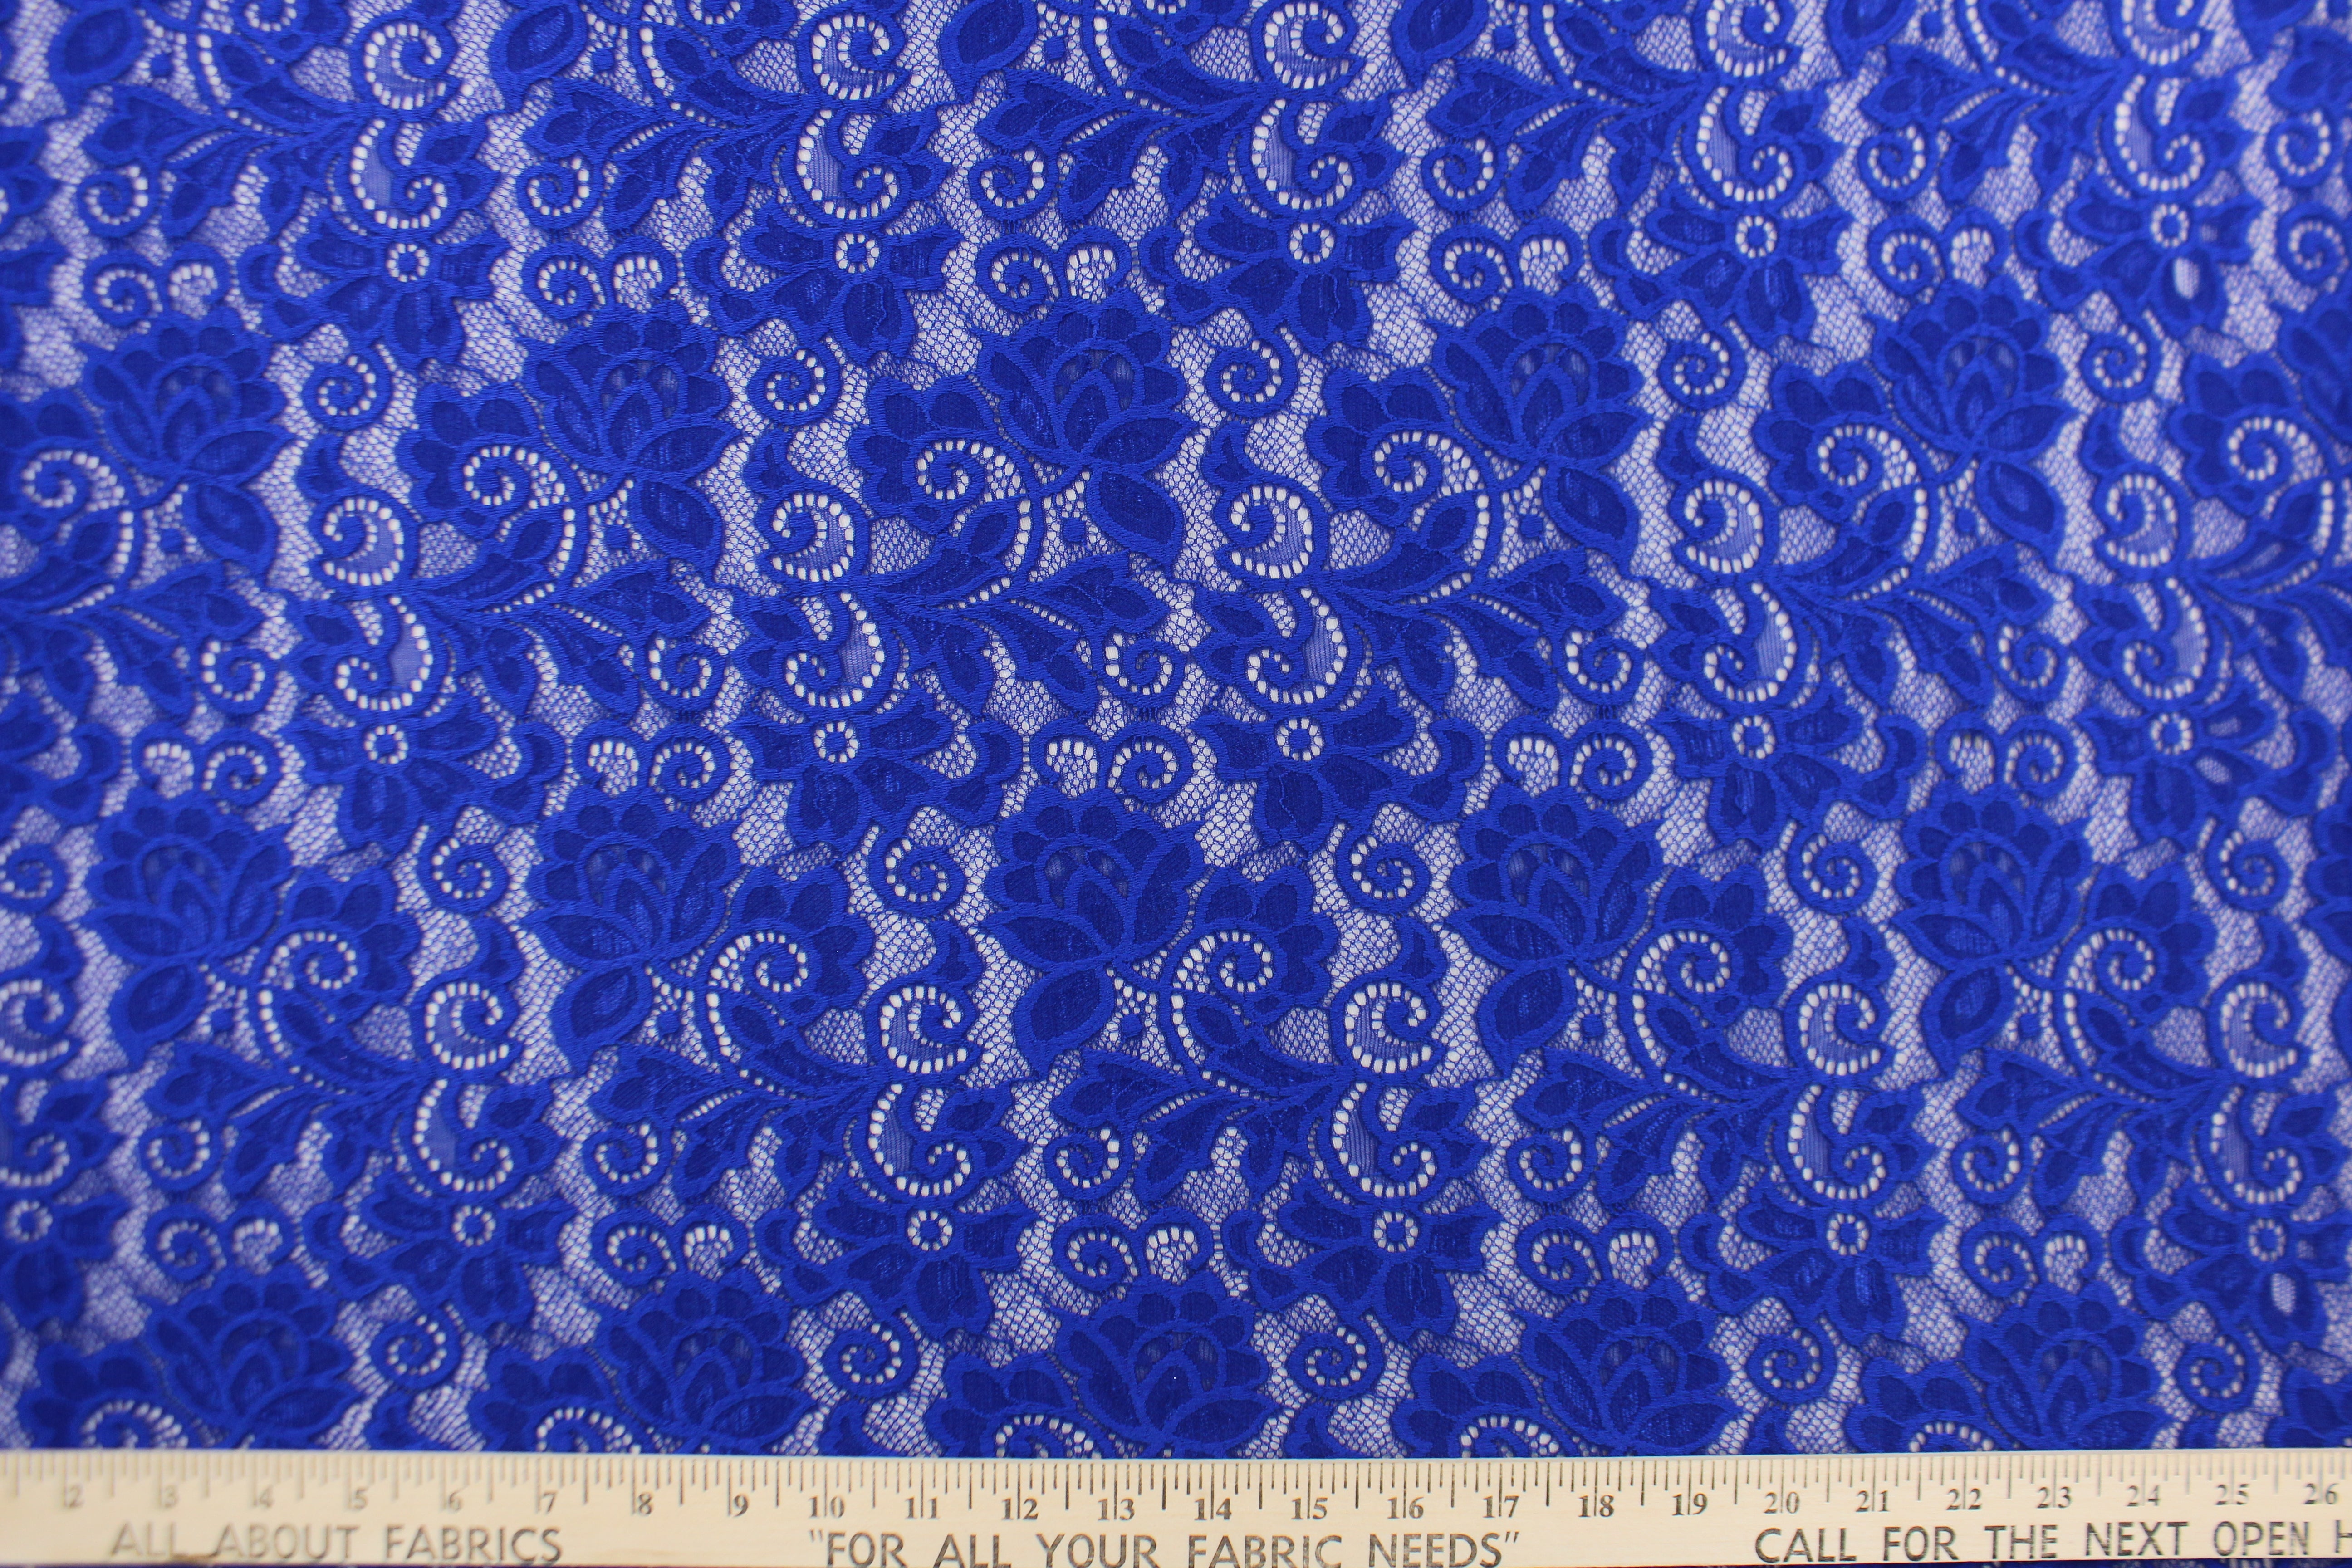 Royal Blue 4 Way Stretch Lace Mesh, Blue Floral Chantilly Lace Fabric, Lace  for Lingerie, Bra, Dresses, Floral Spandex Lace, Delicate Lace 